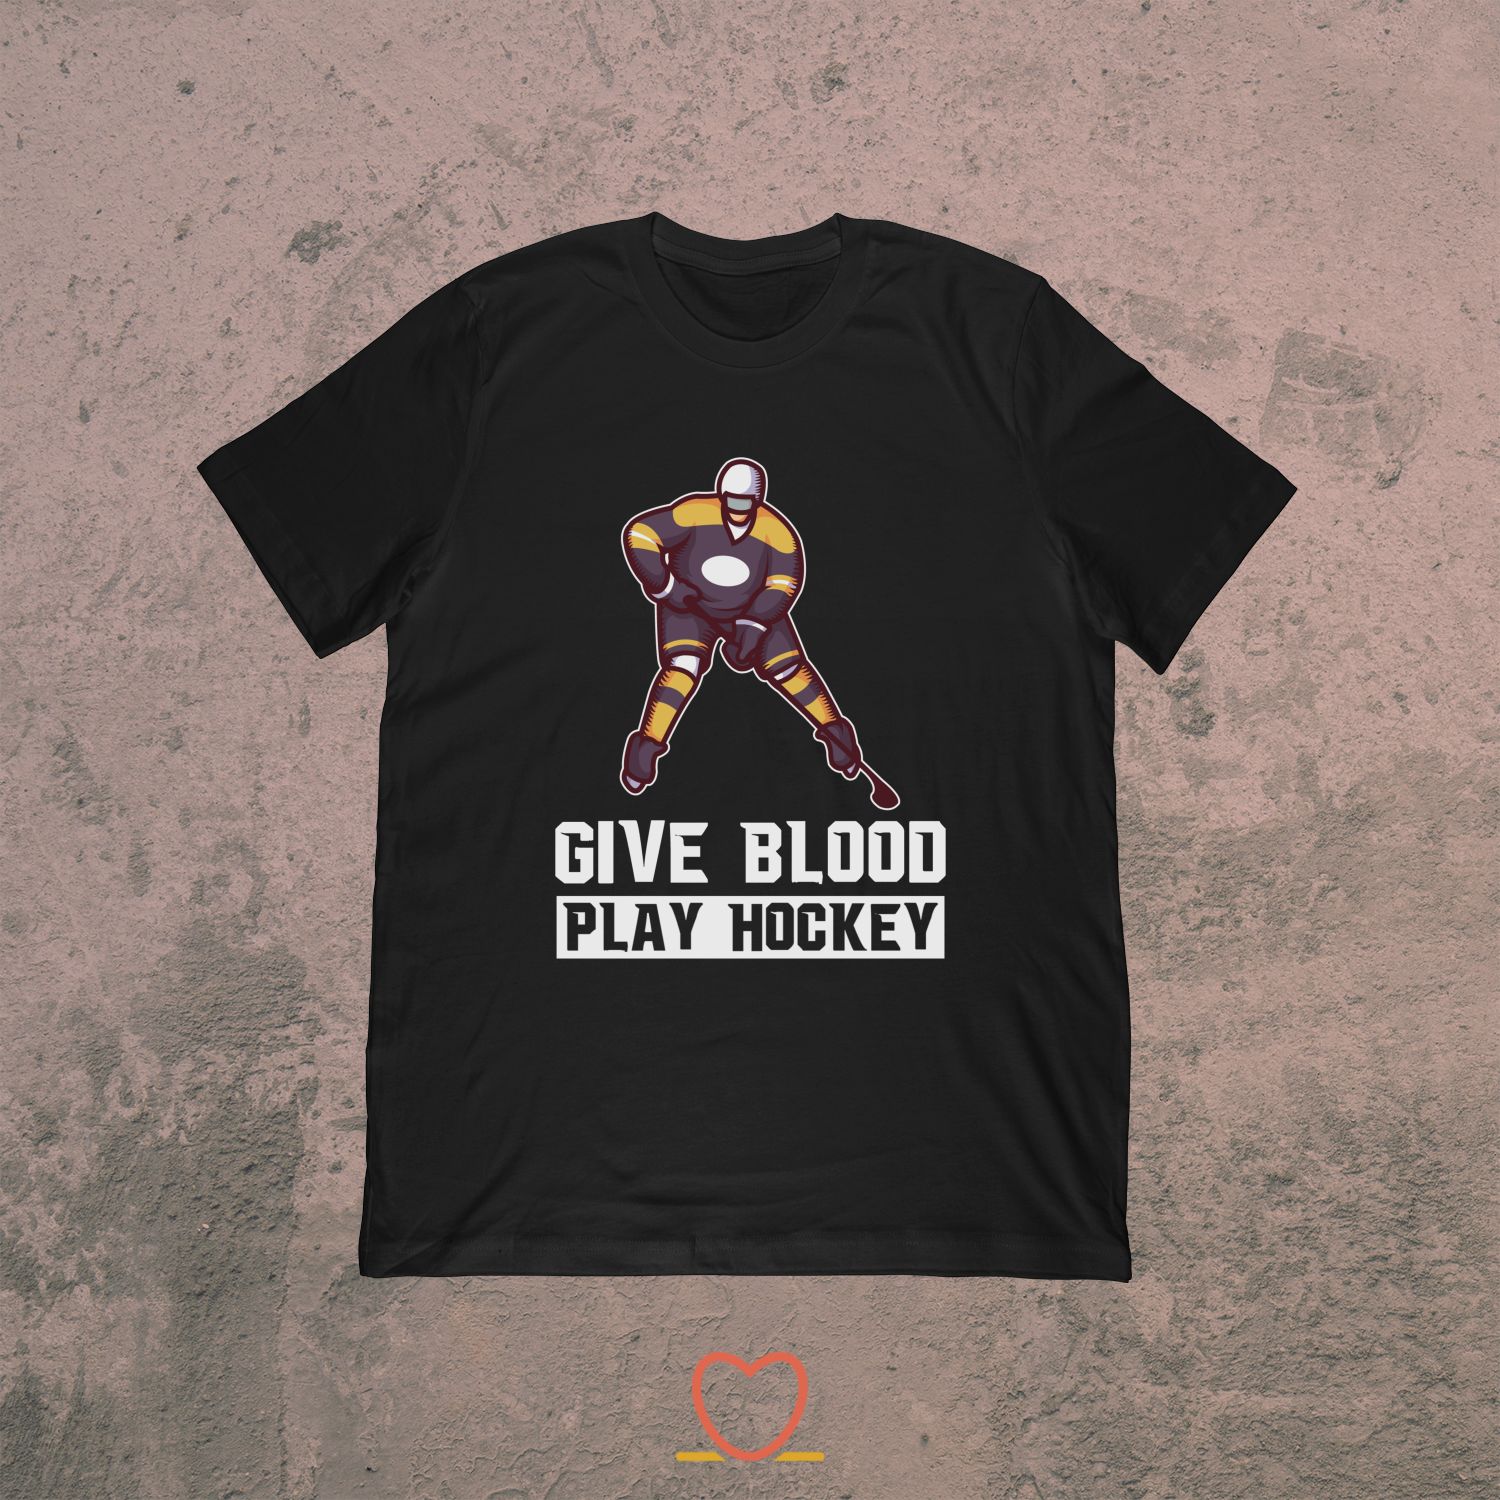 Give Blood Play Hockey – Switch + Funny Ice Hockey Tee